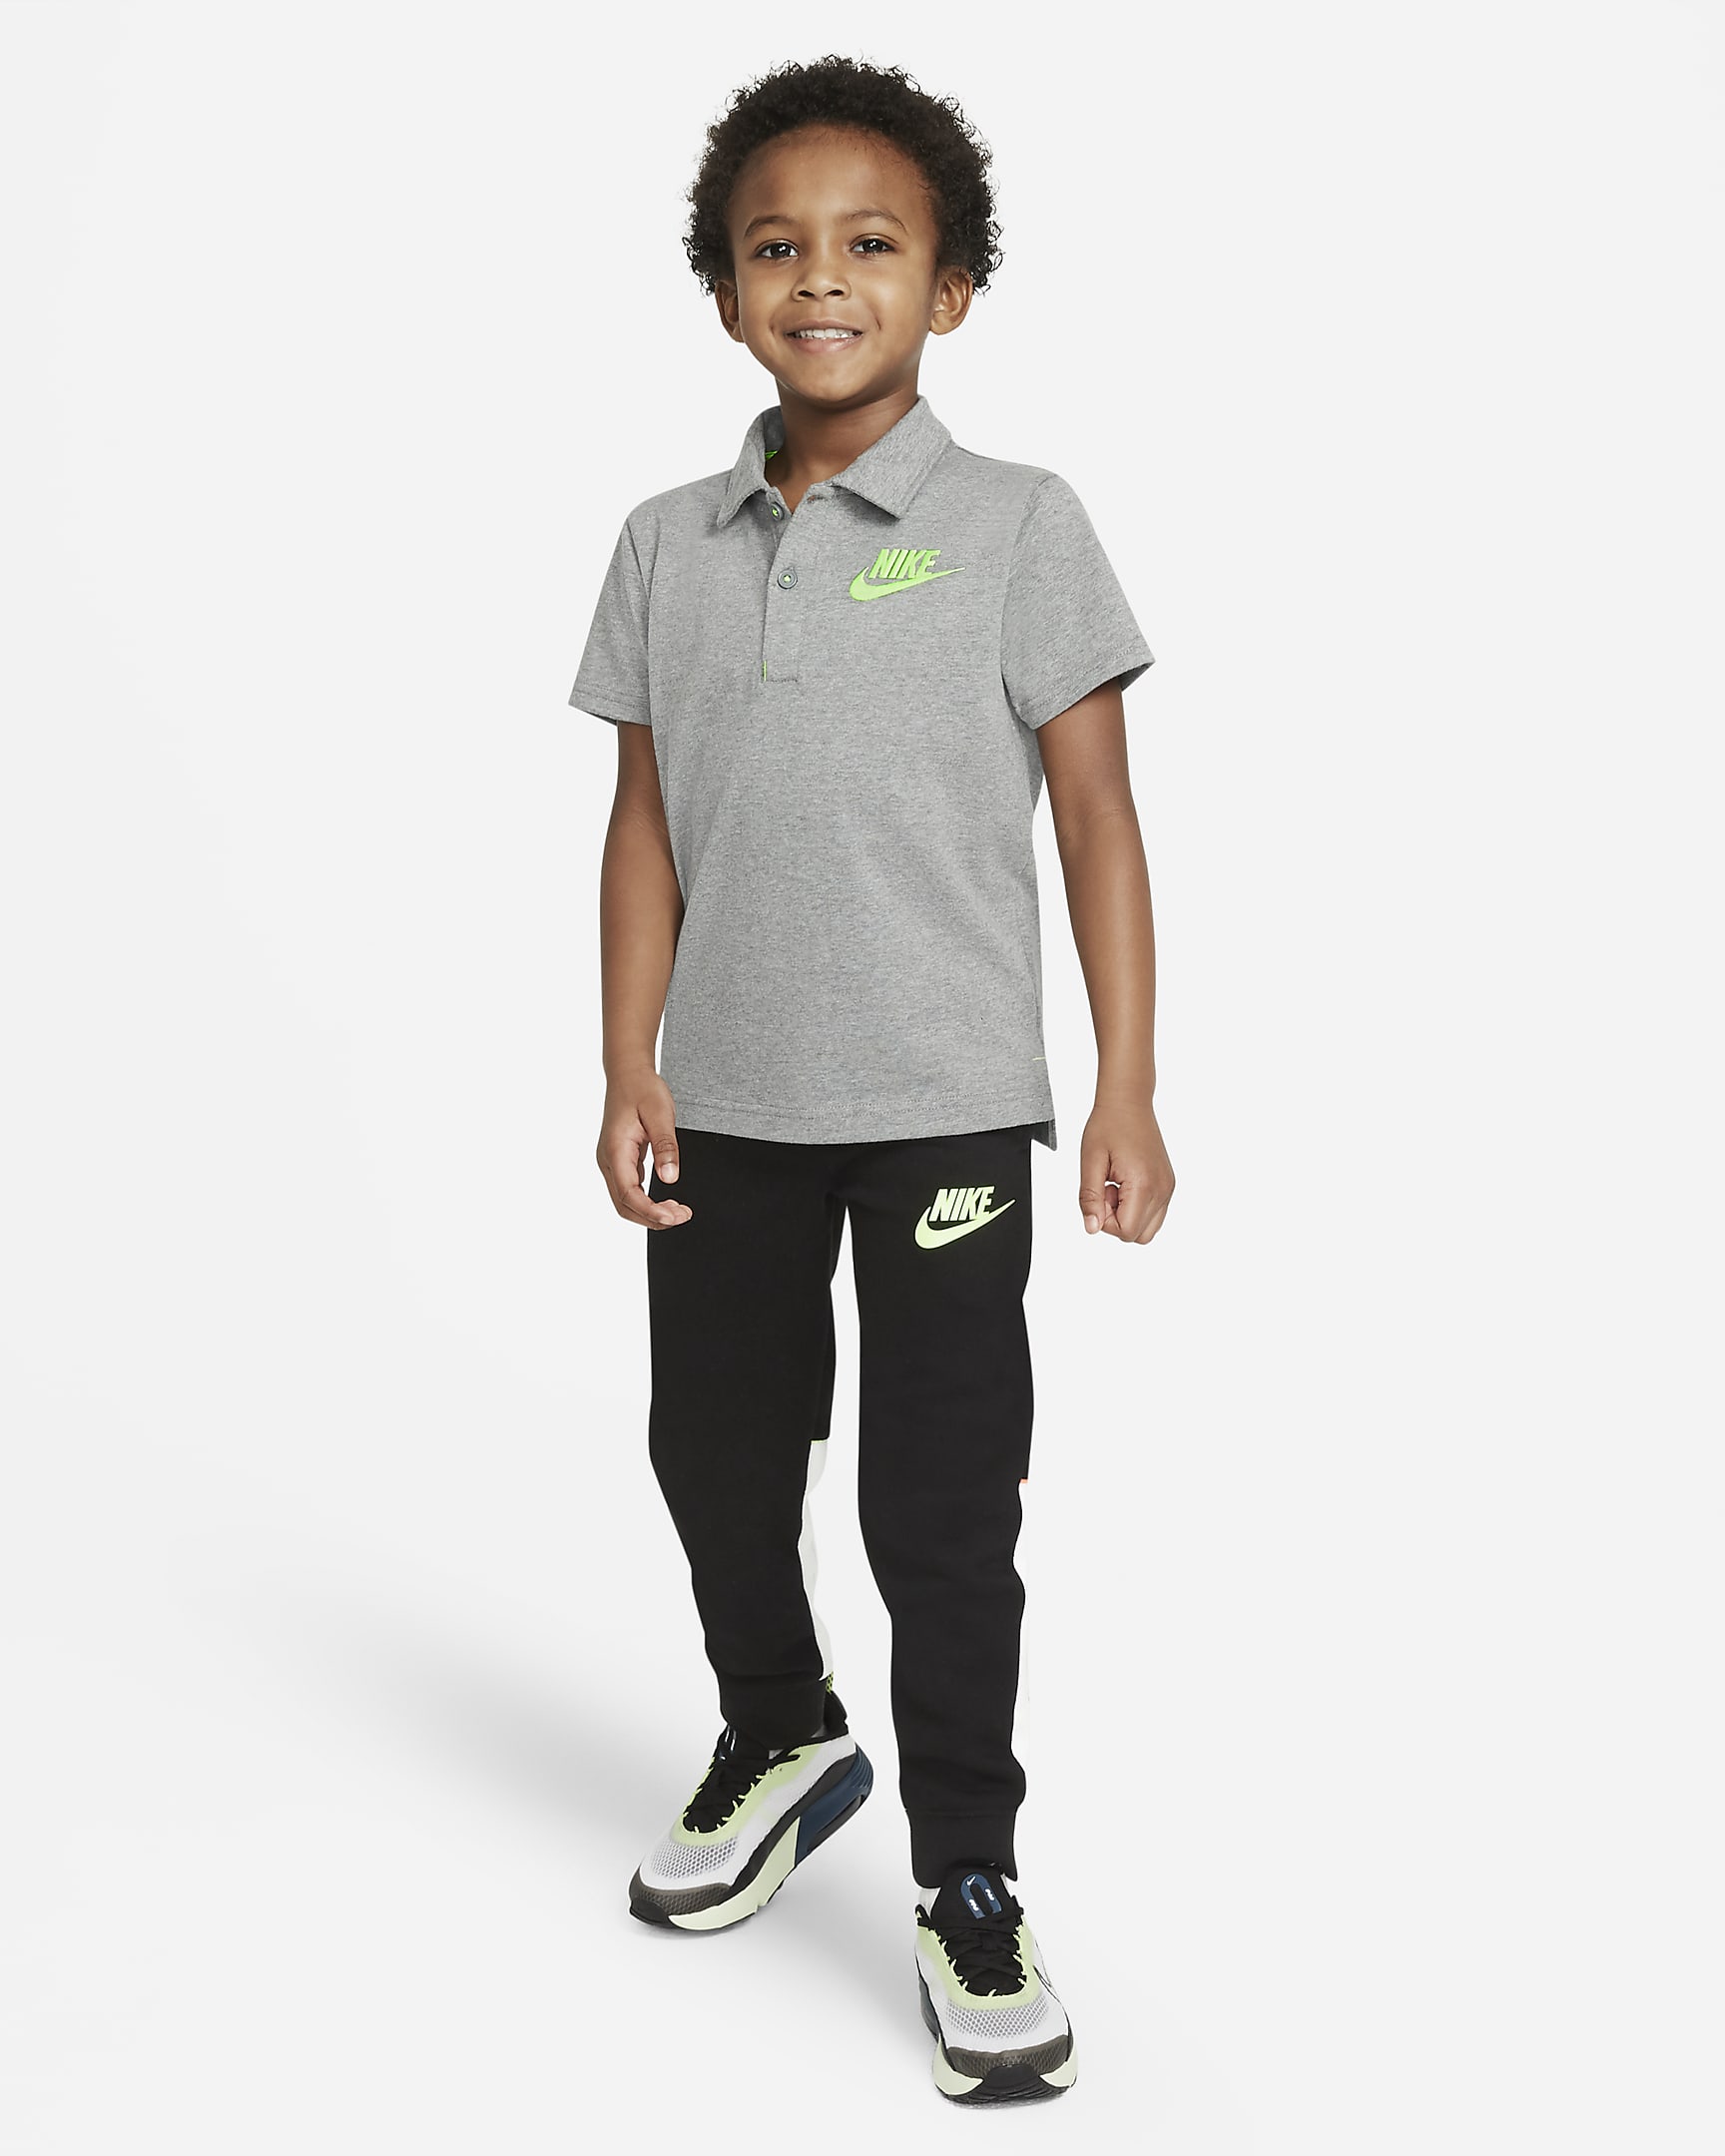 Nike Dri-FIT Little Kids' Polo Top. Nike.com